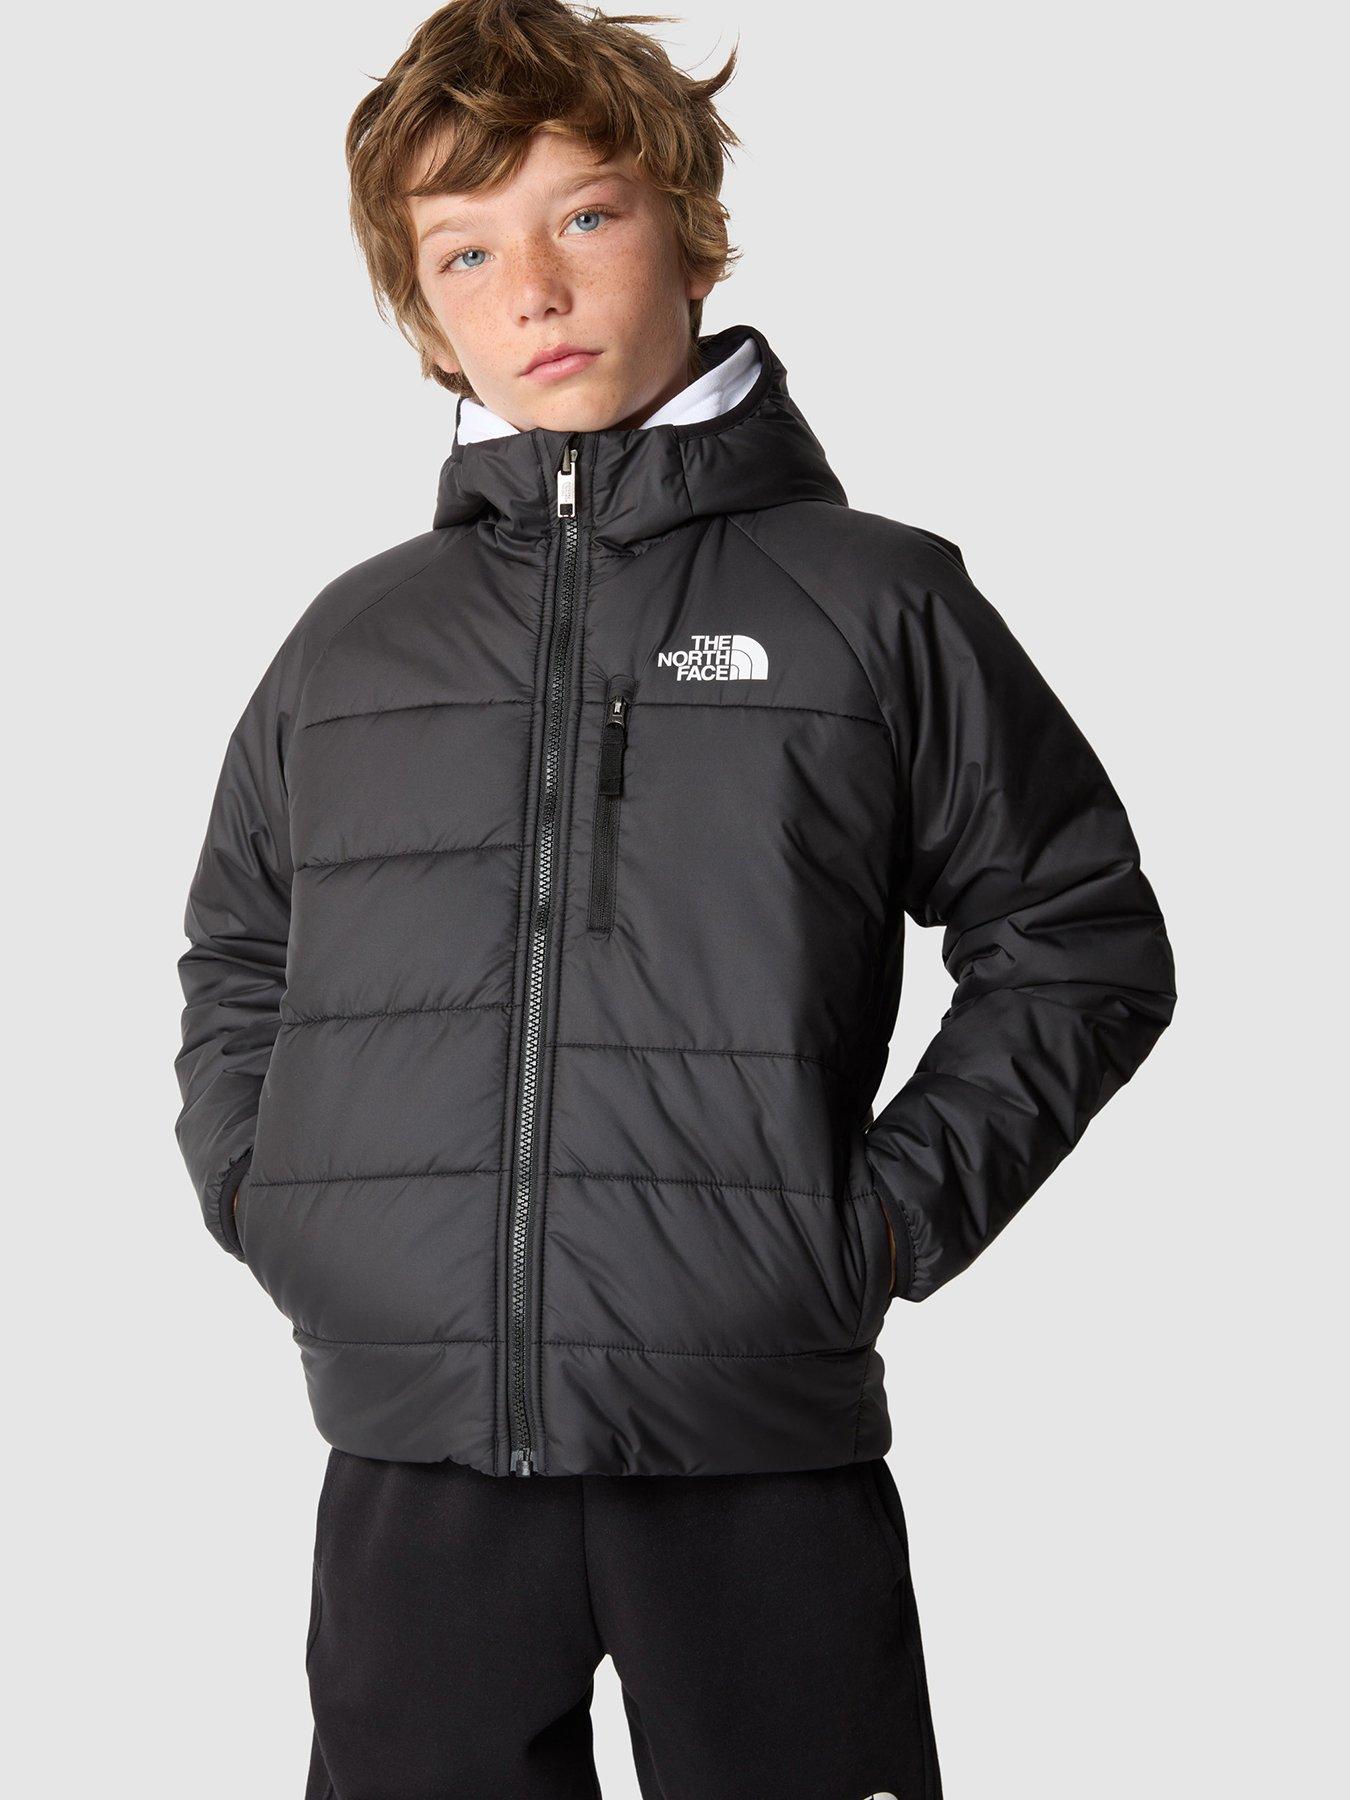 Boy | Coats & jackets | Kids & baby sports clothing | Sports